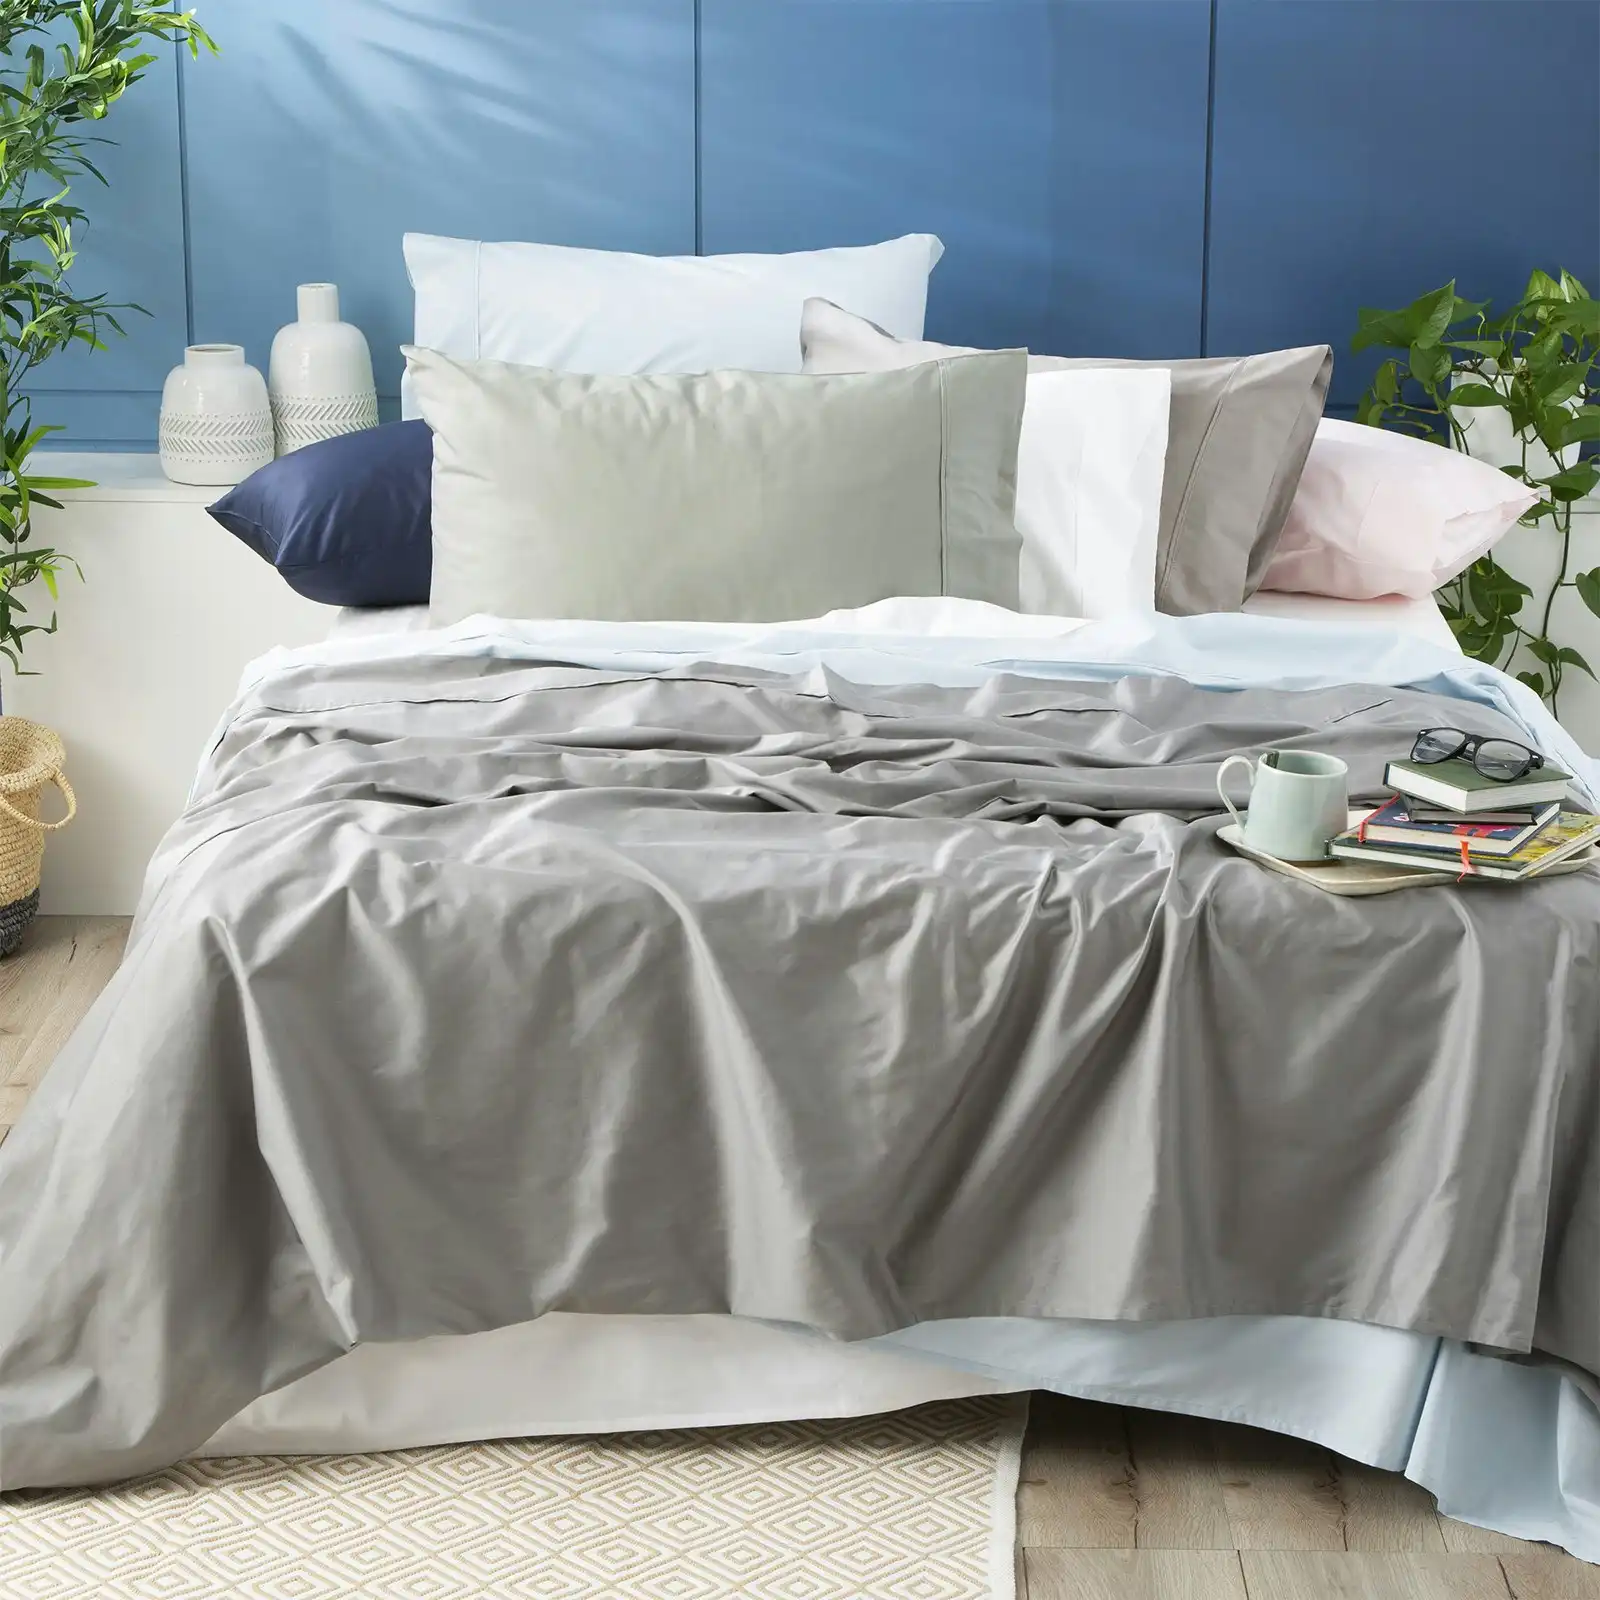 Park Avenue King Bed Sheet/Pillowcases Set 500TC Bamboo Cotton Bedding Charcoal